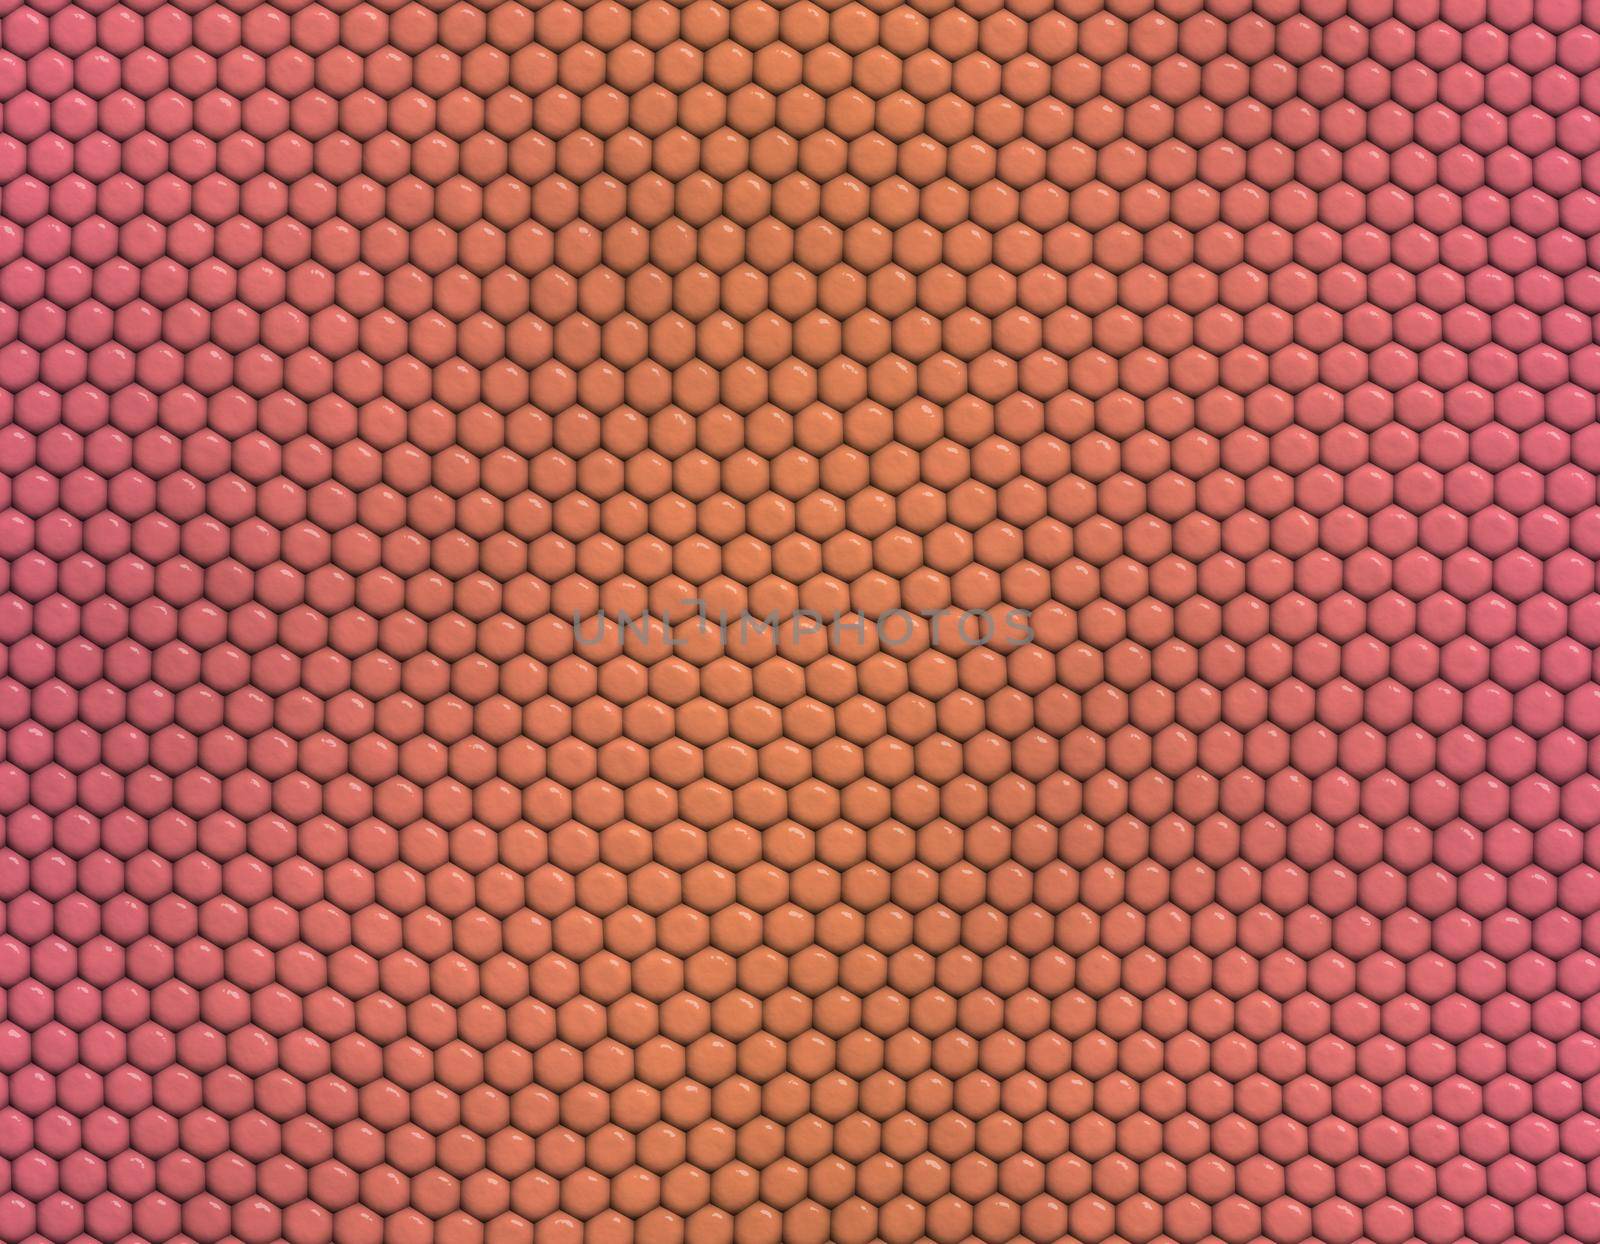 Pink and orange gradient snake skin pattern, hexagonal scale by Bezdnatm